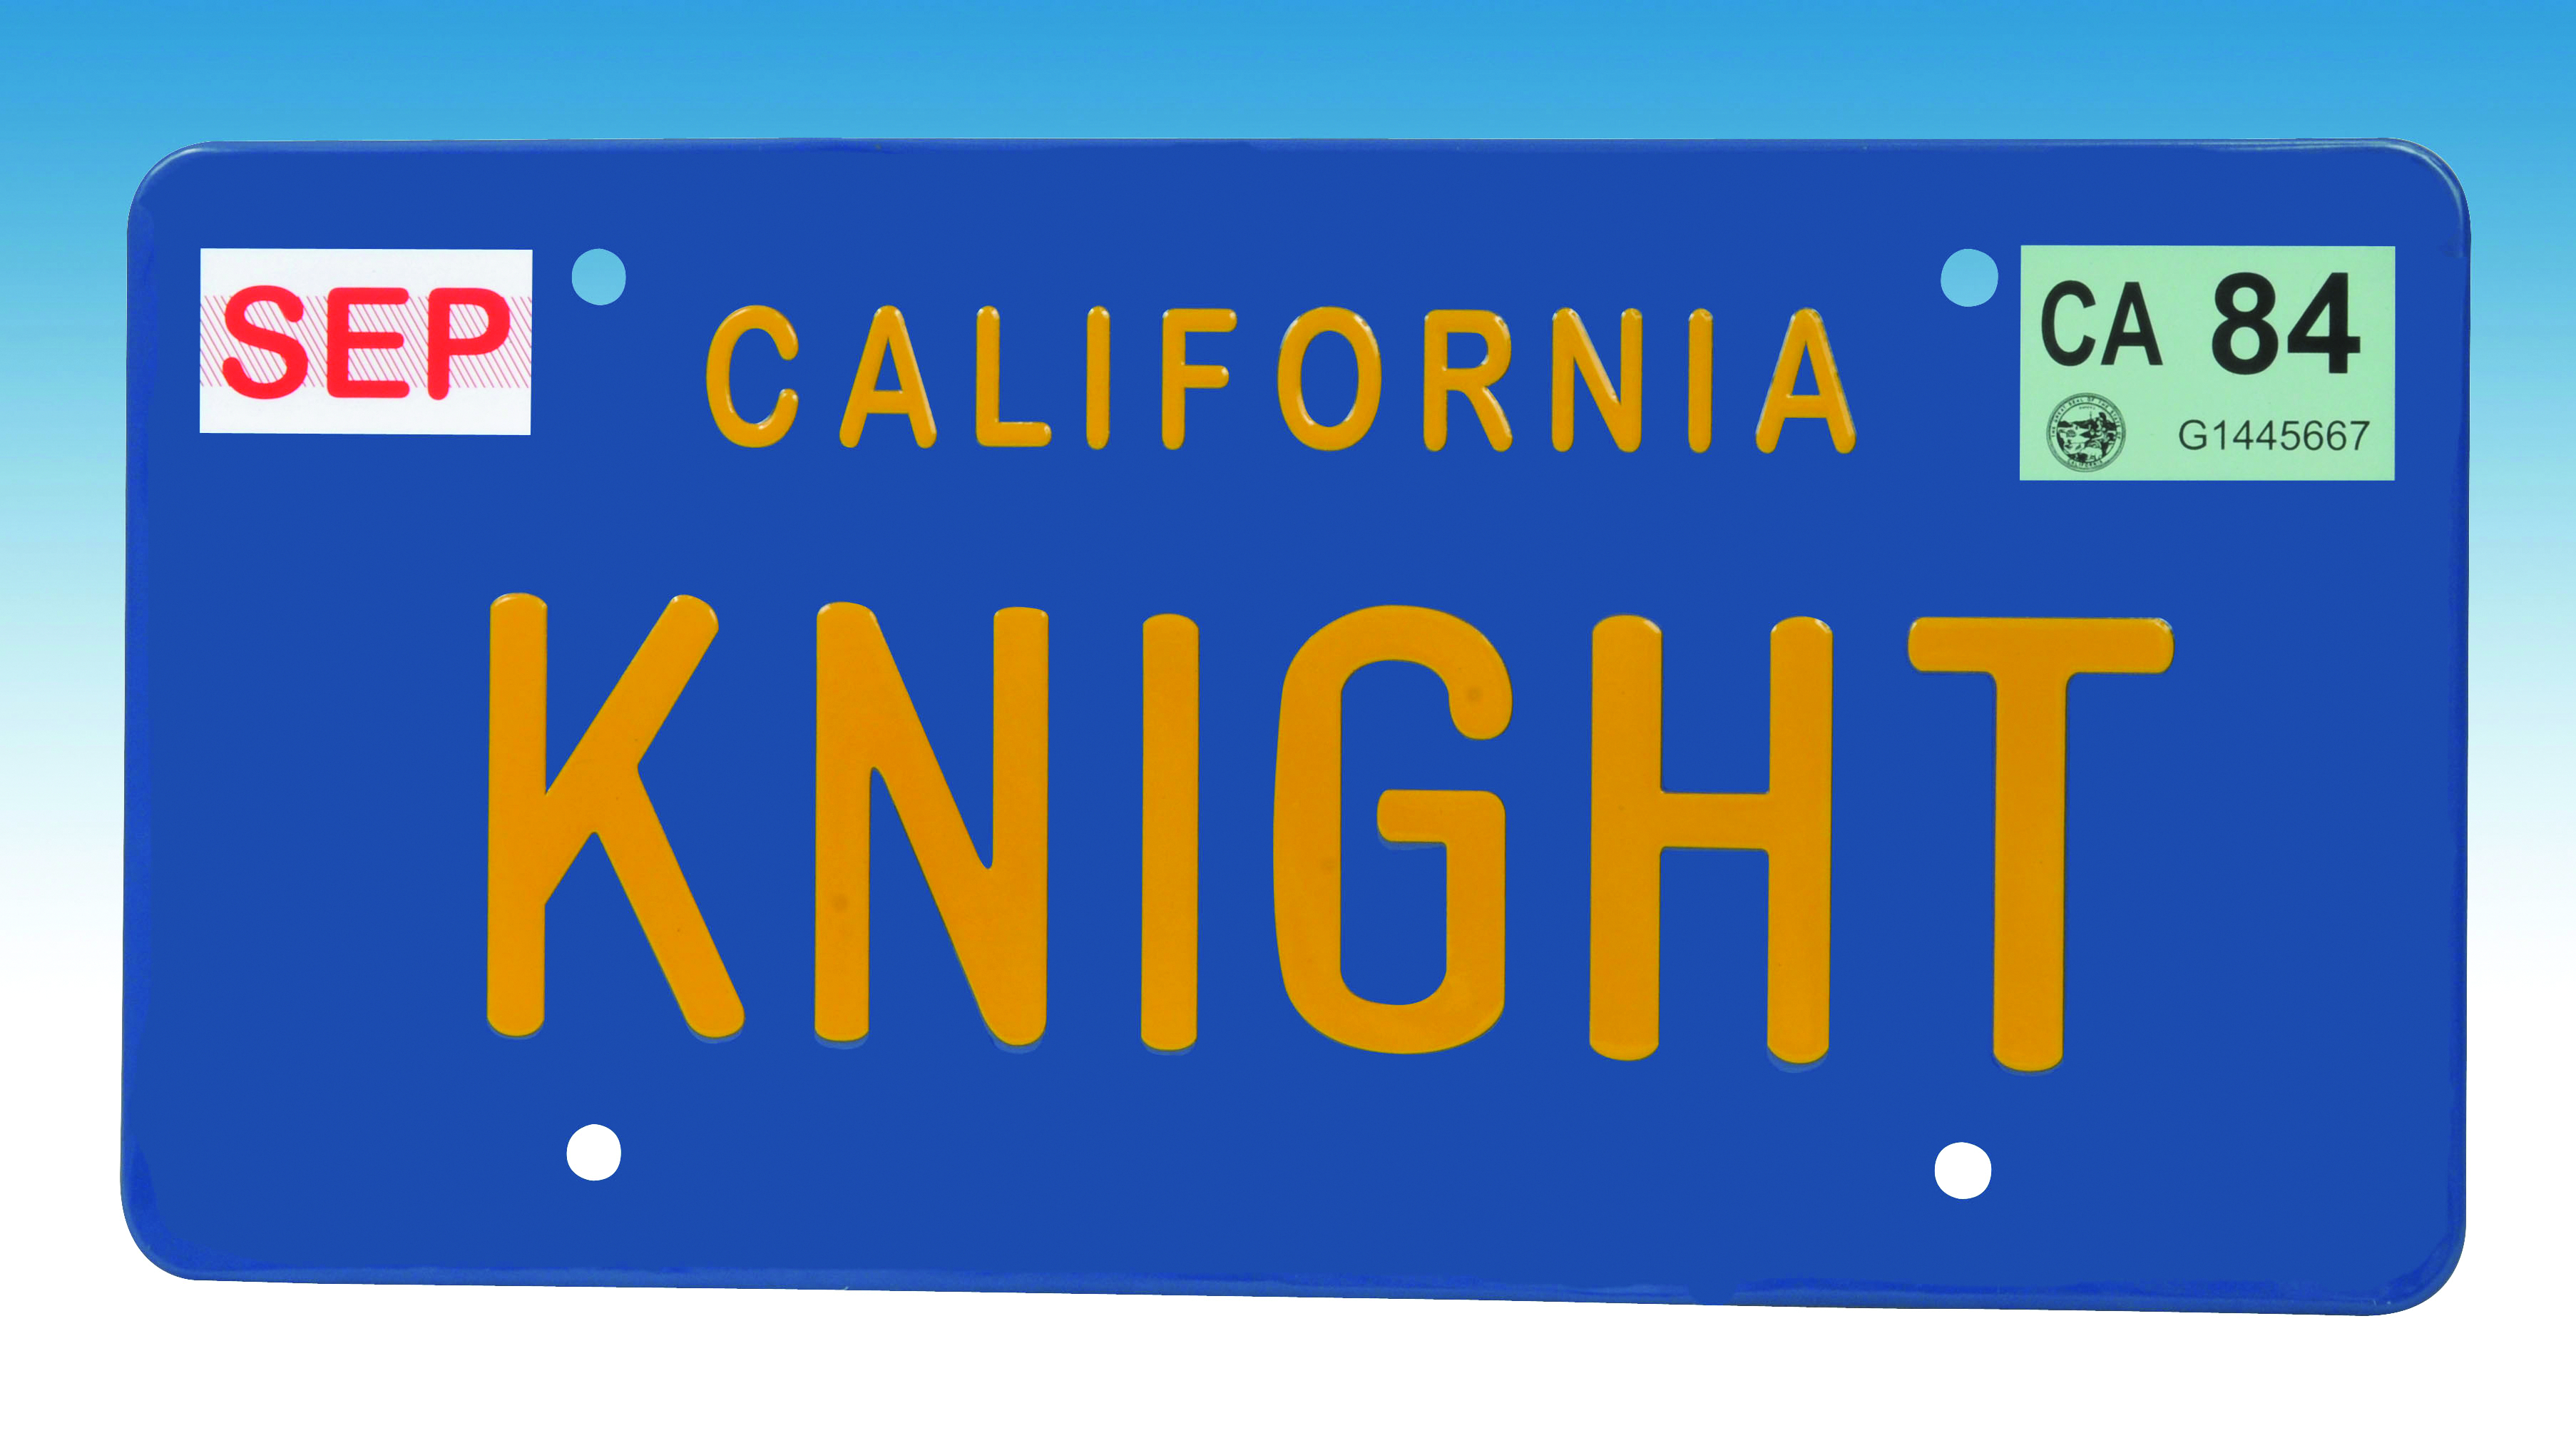 1980's TV Show Knight Rider KNIGHT Design Aluminum License Plate Novelty Sign 